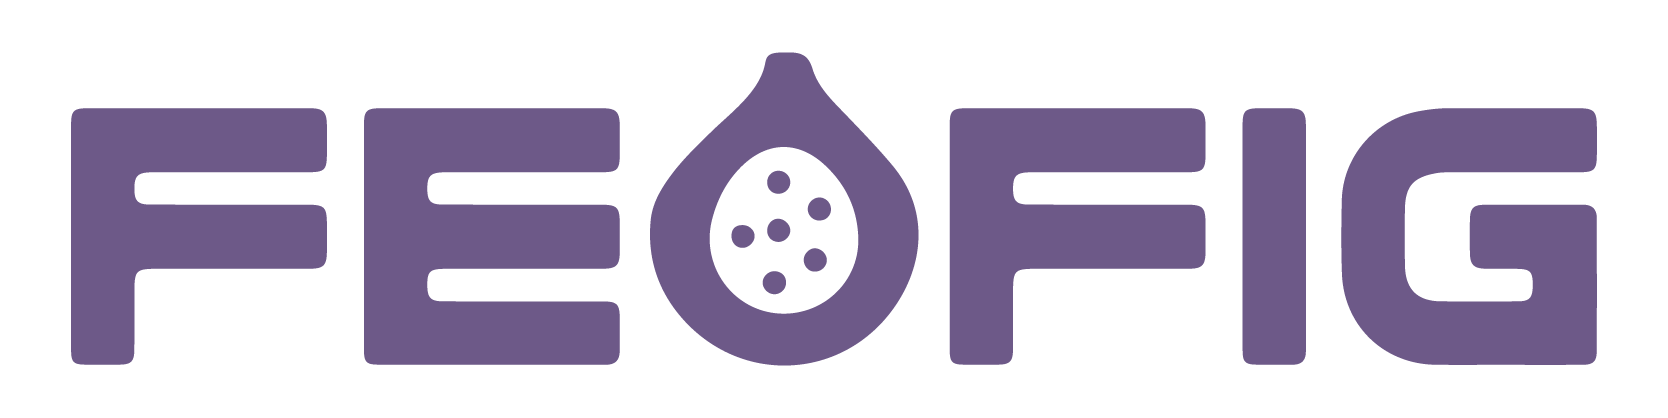 FEOFIG-Logo-01